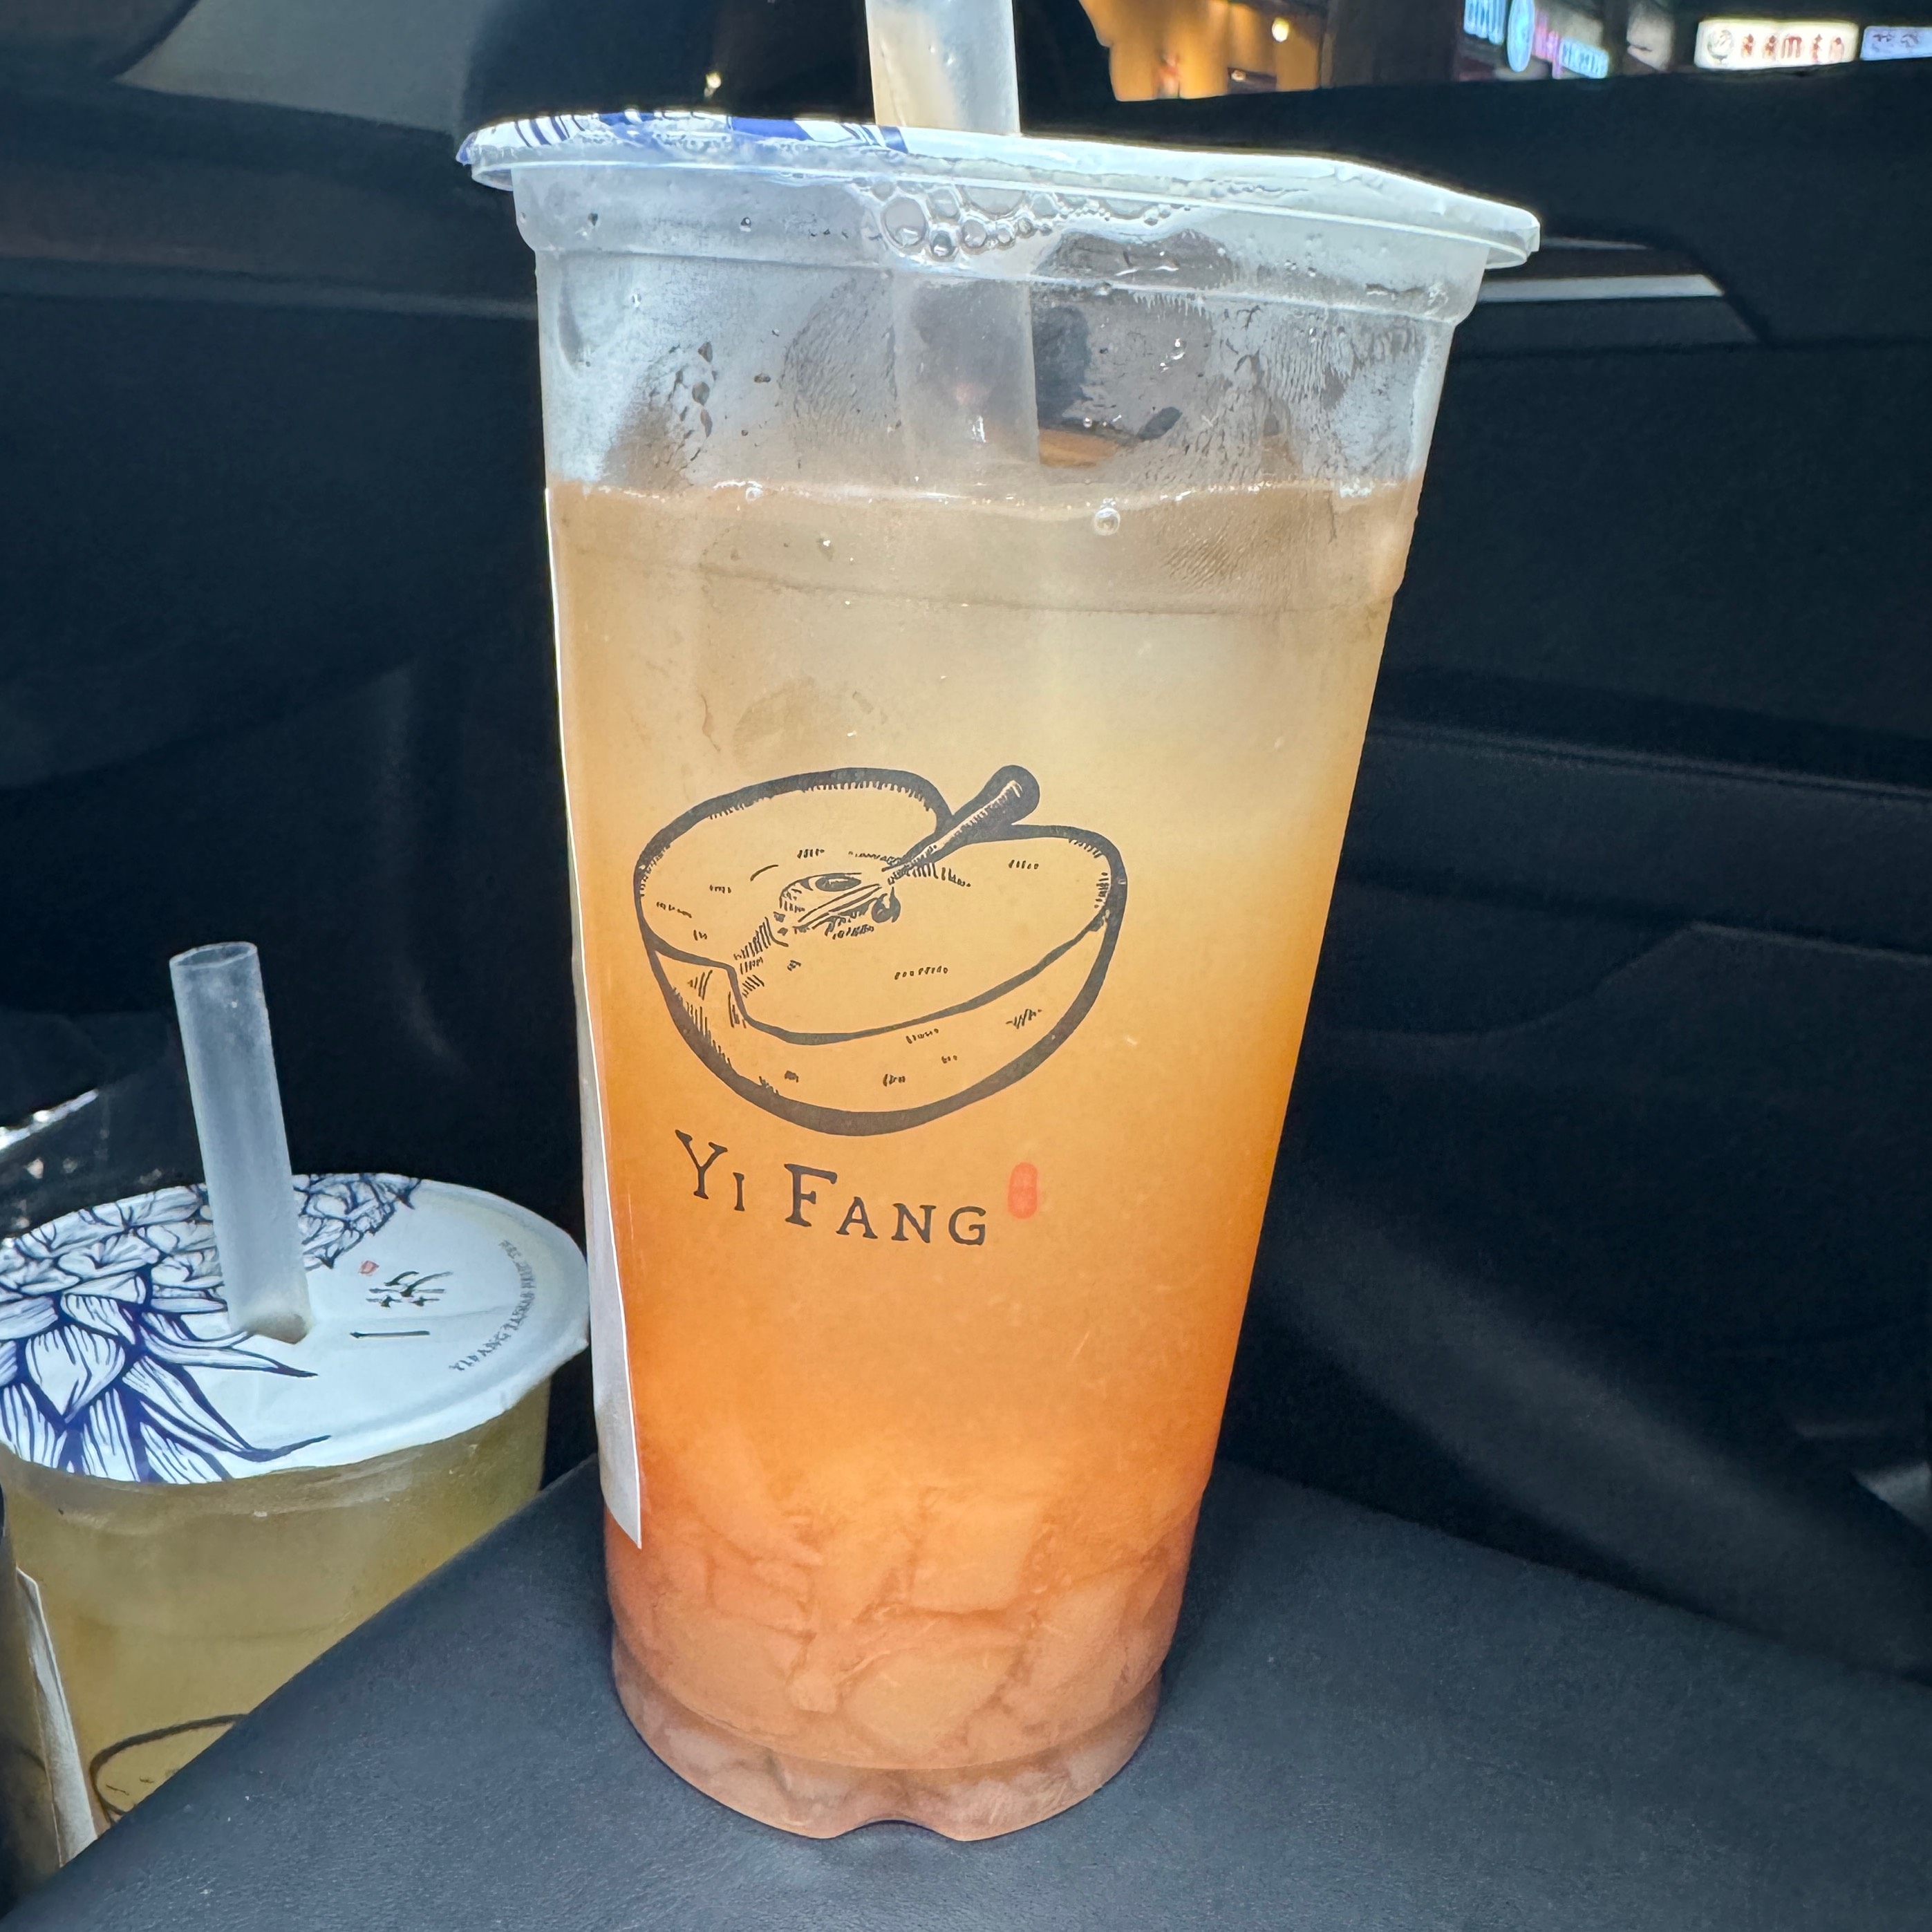 Peach Green Tea $6 at Yi Fang on #foodmento http://foodmento.com/place/12858